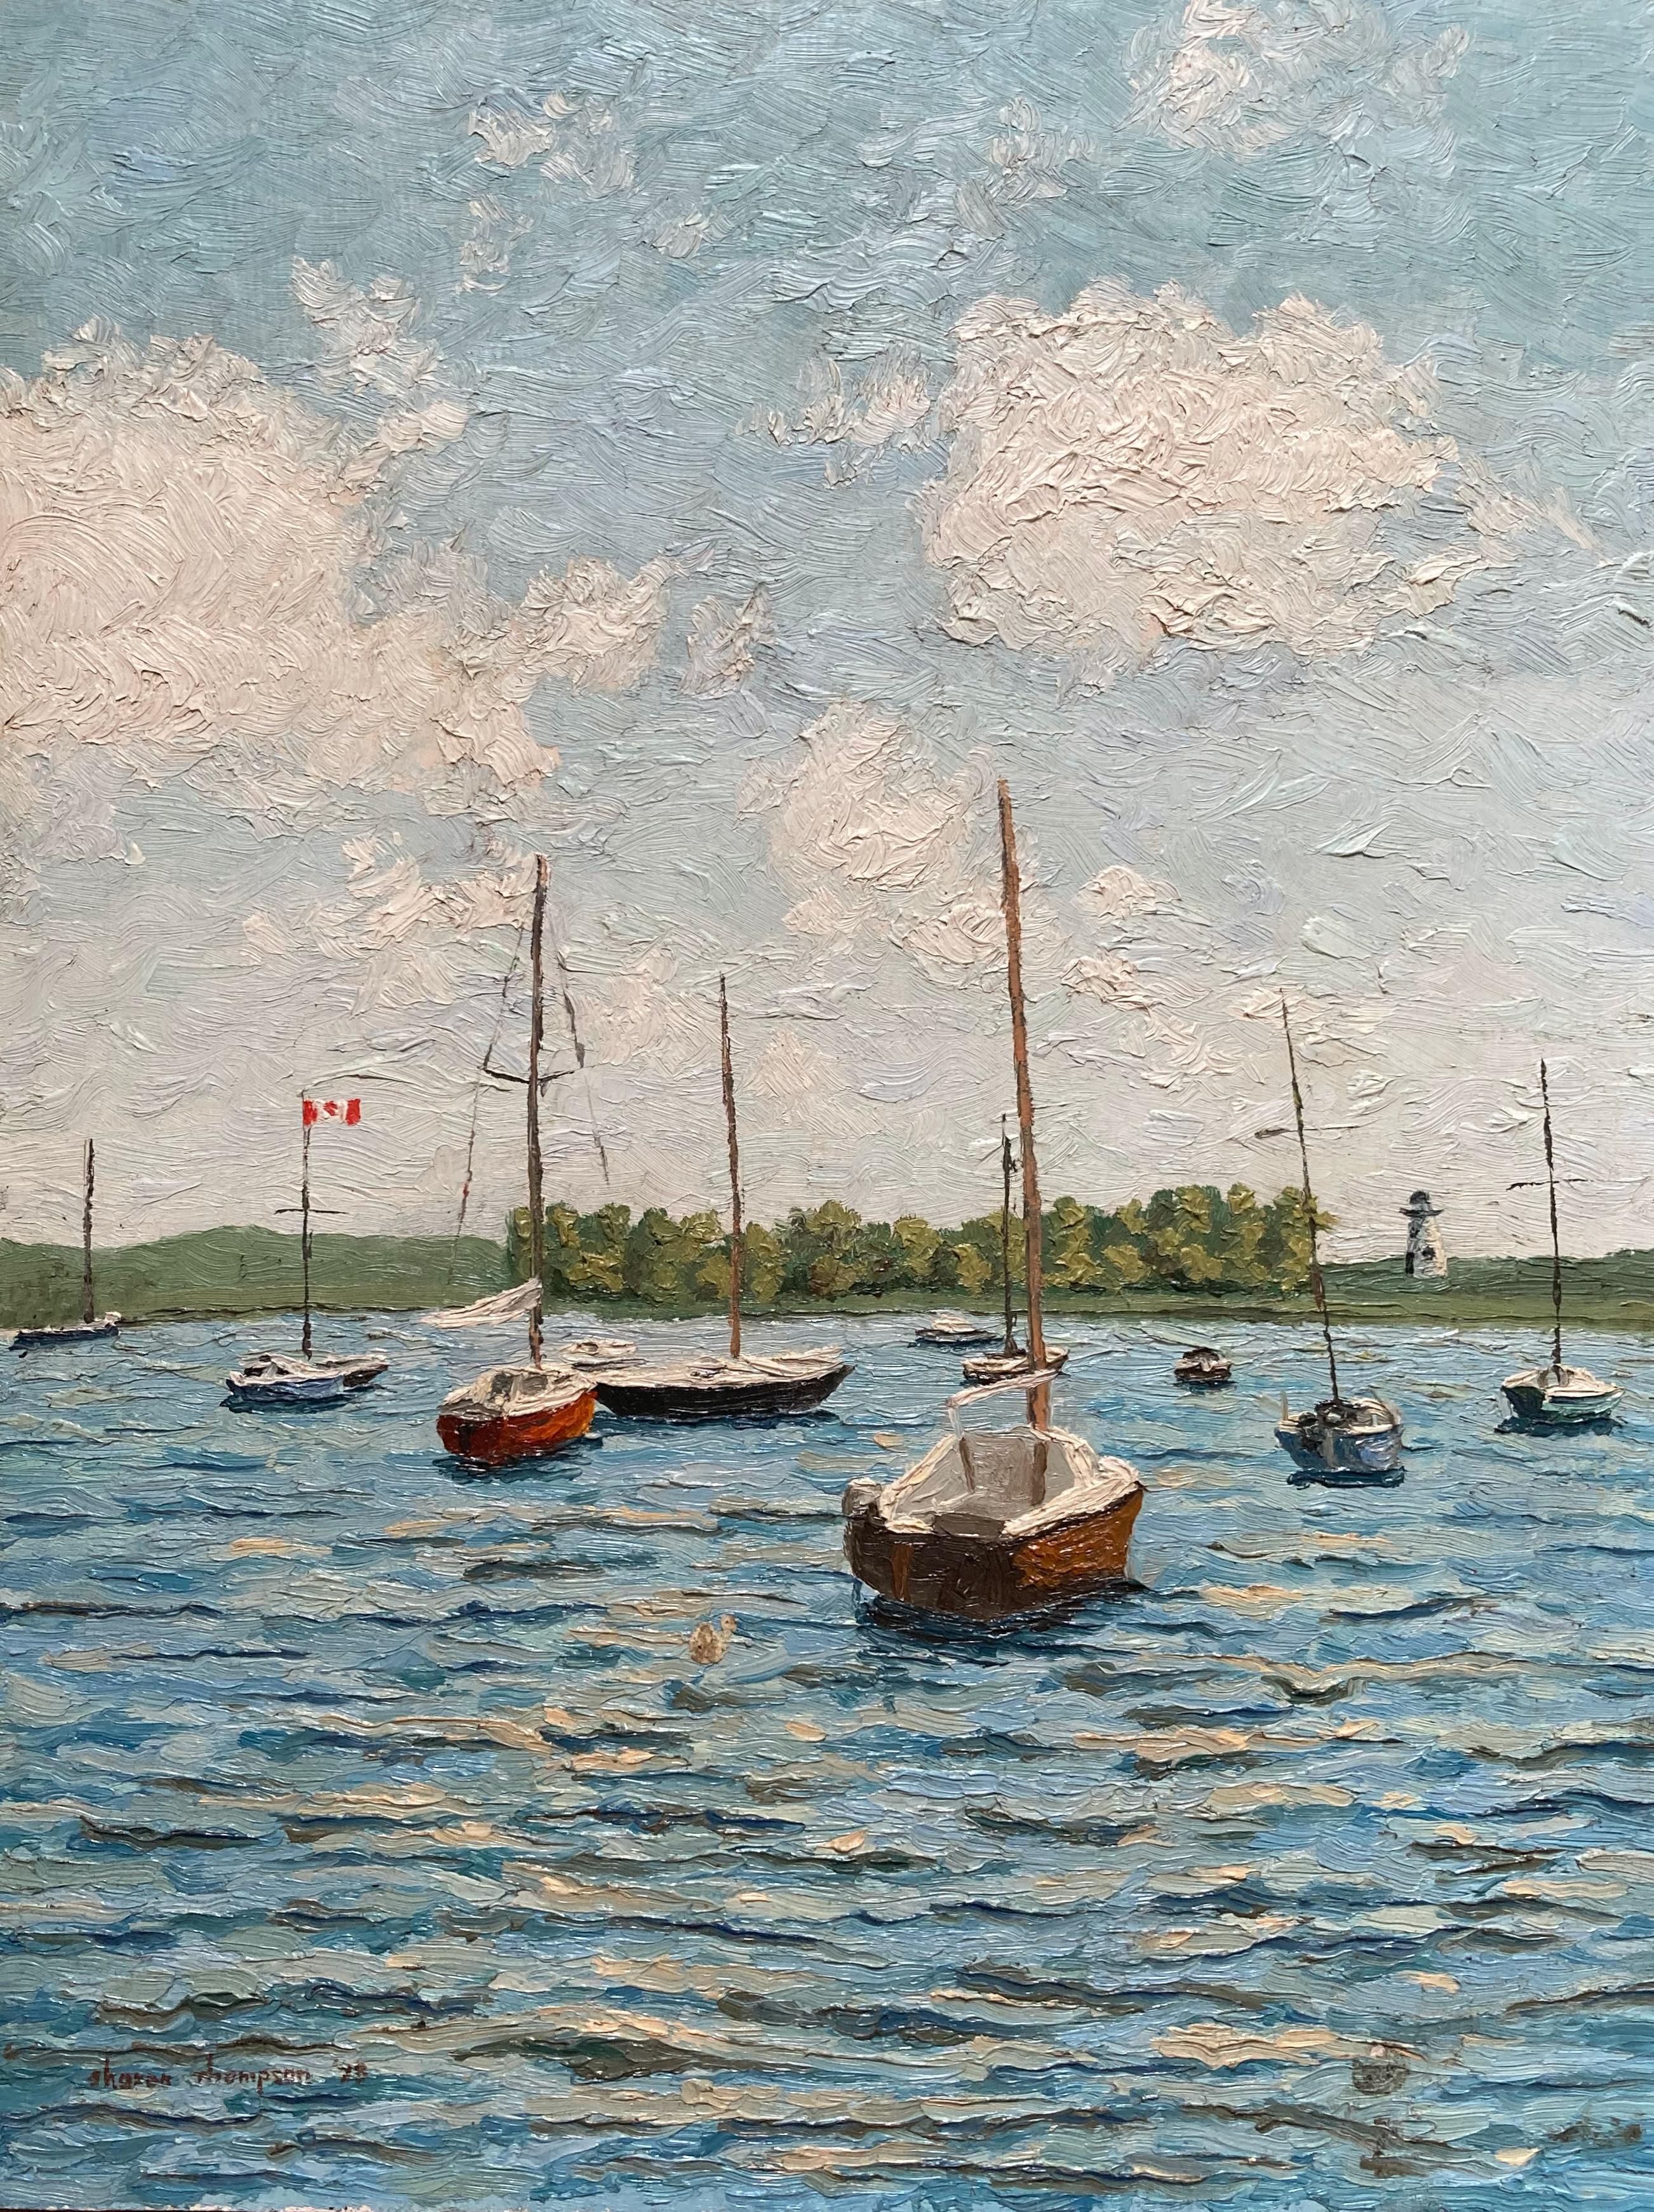 Sharon Thompson Landscape Painting – Segelboote am Anker